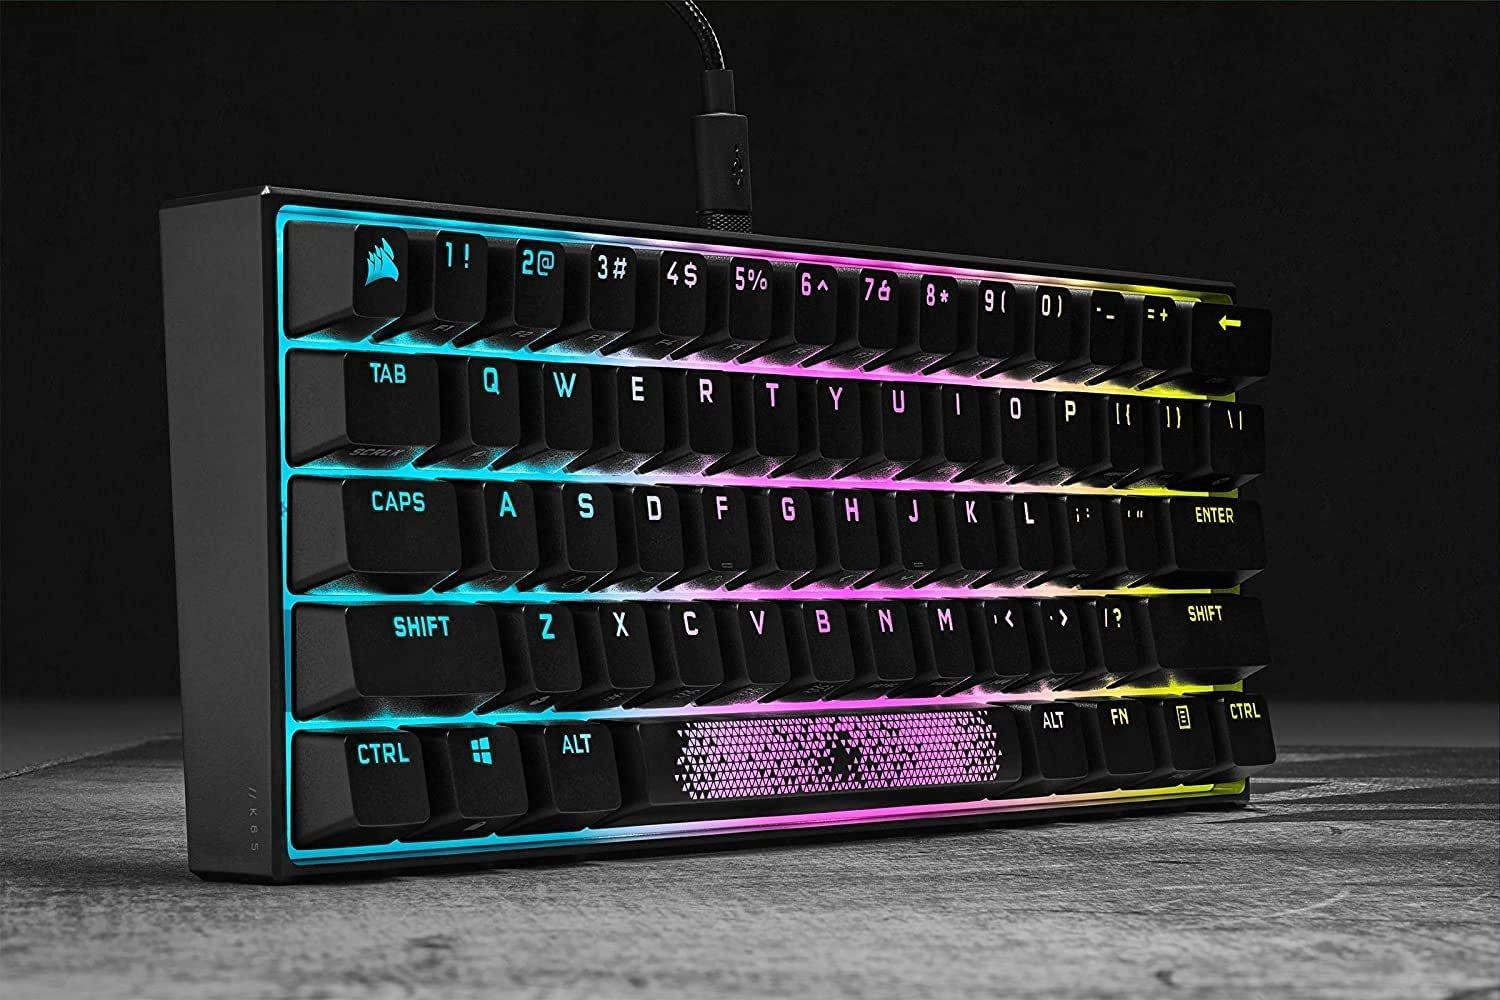 Corsair K65 RGB Mini review: a stunning 60% gaming keyboard